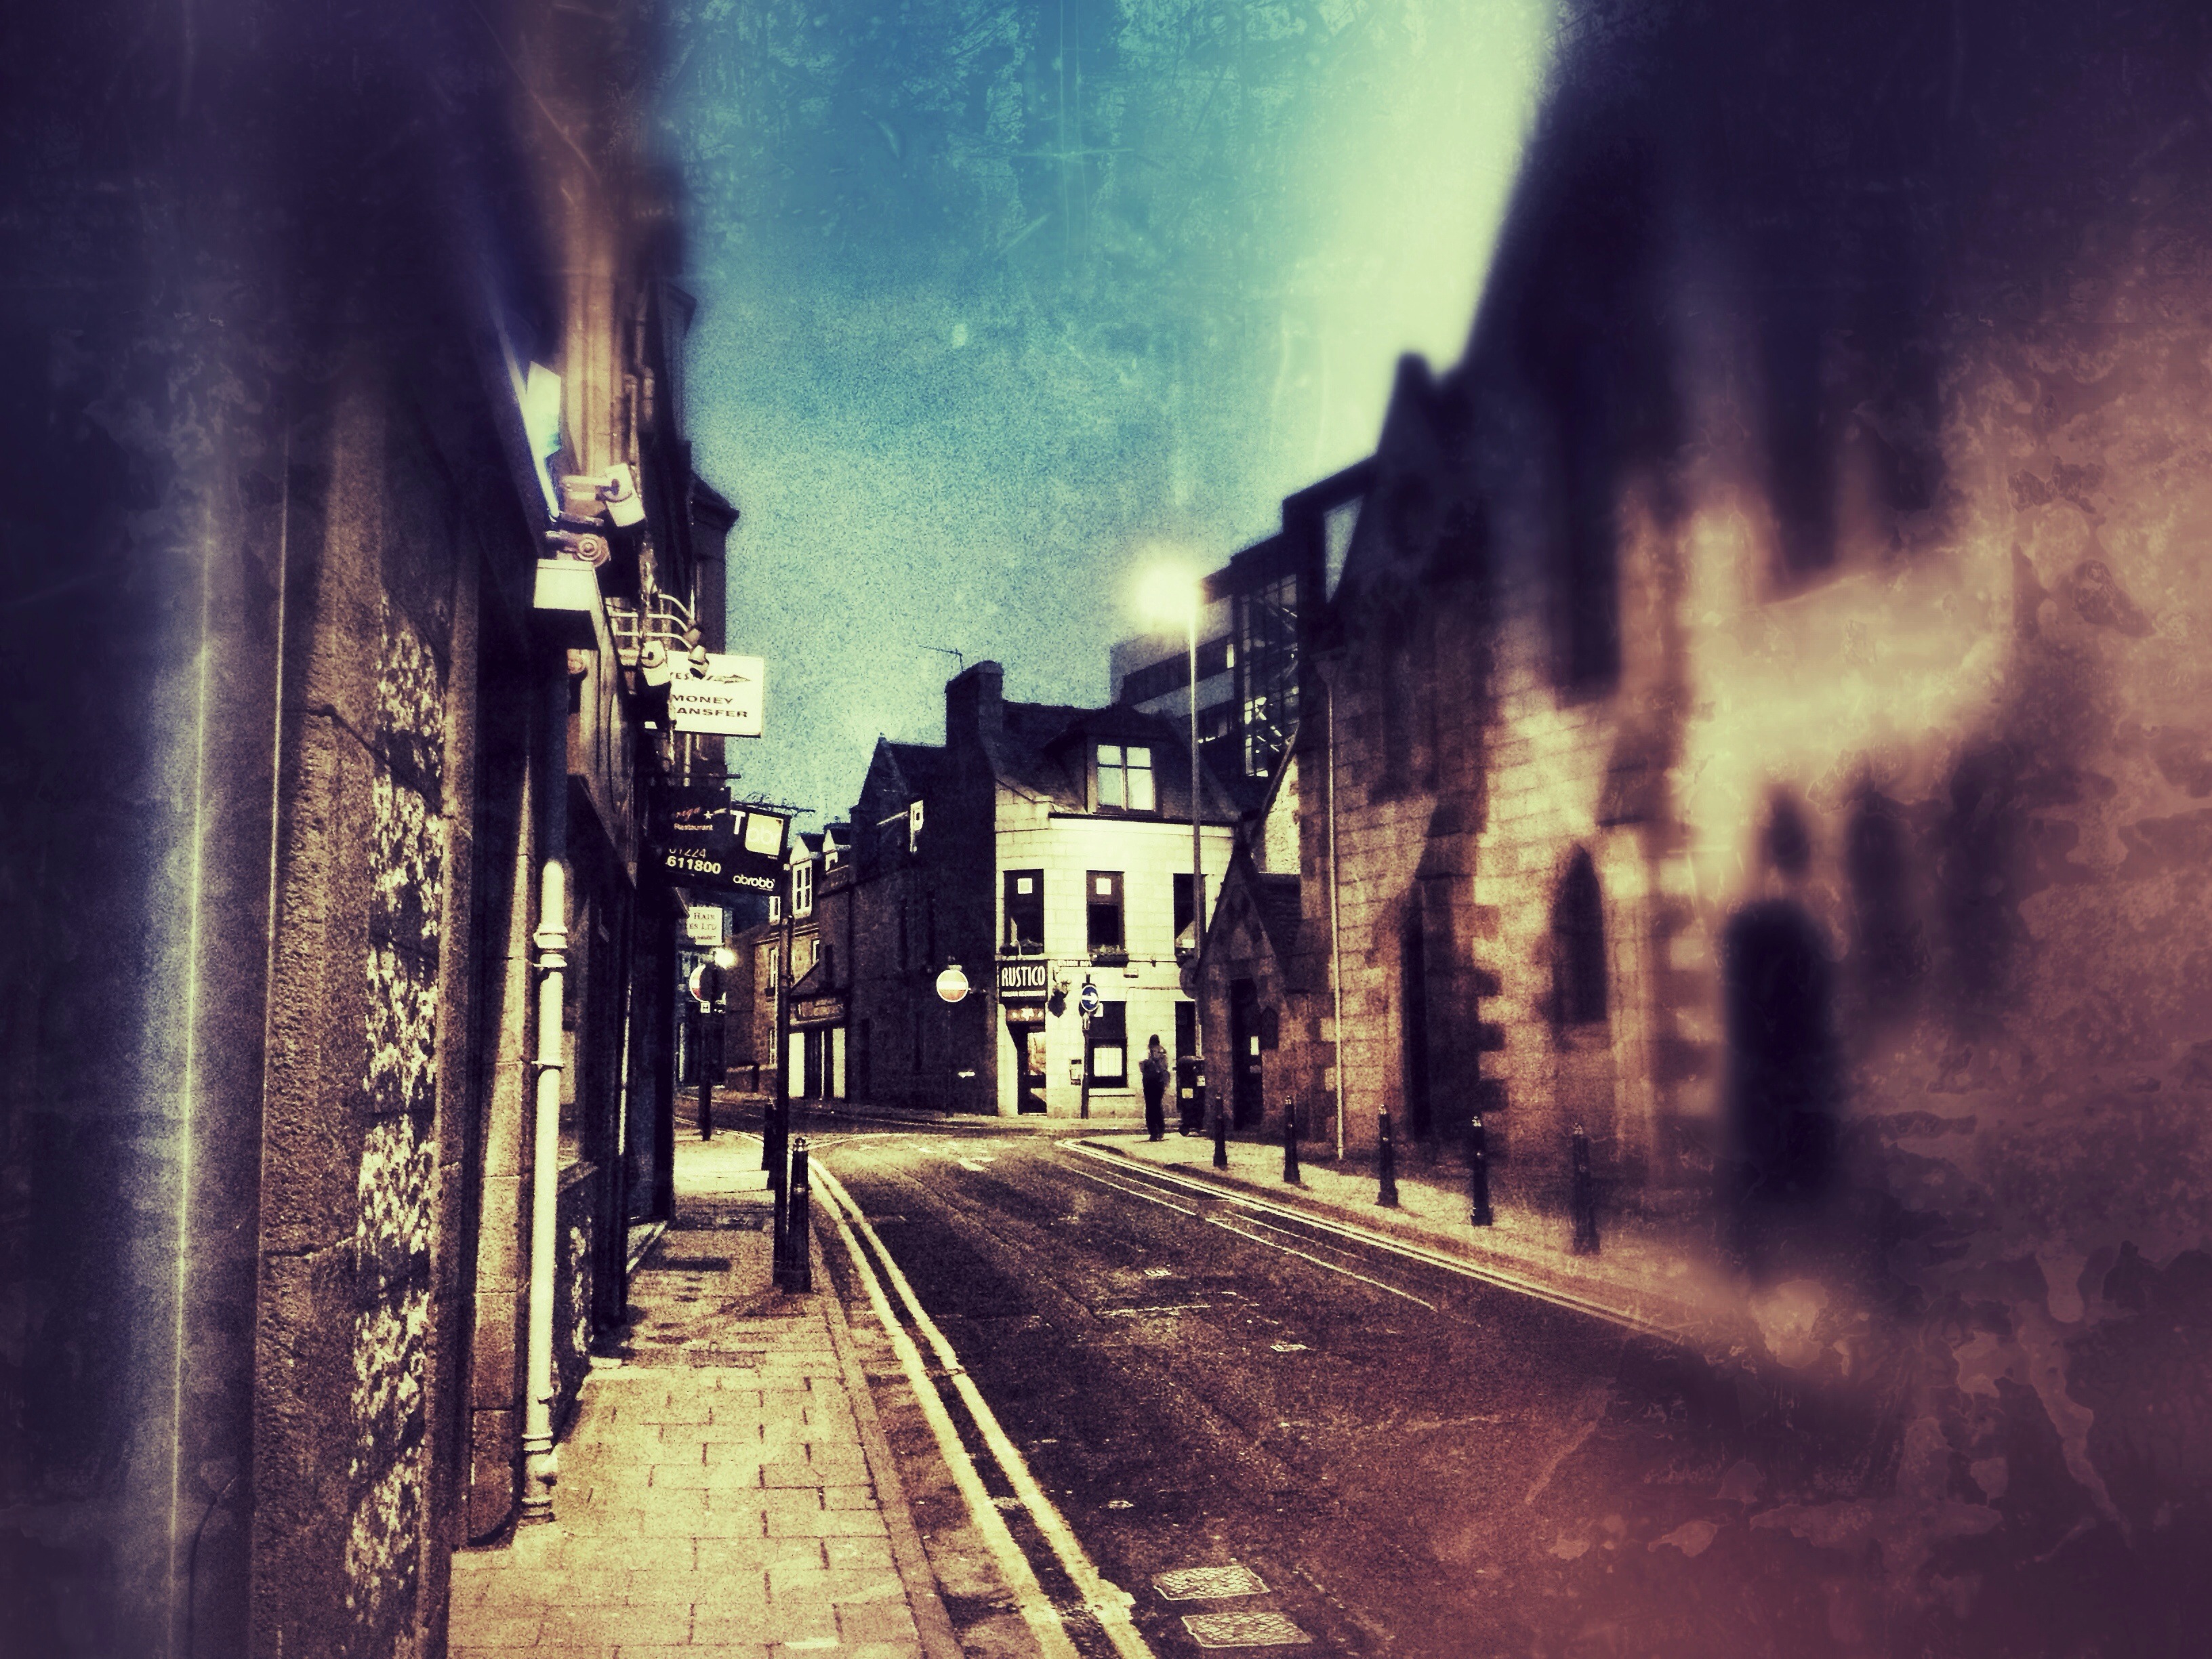 Photograph: Narrow Street